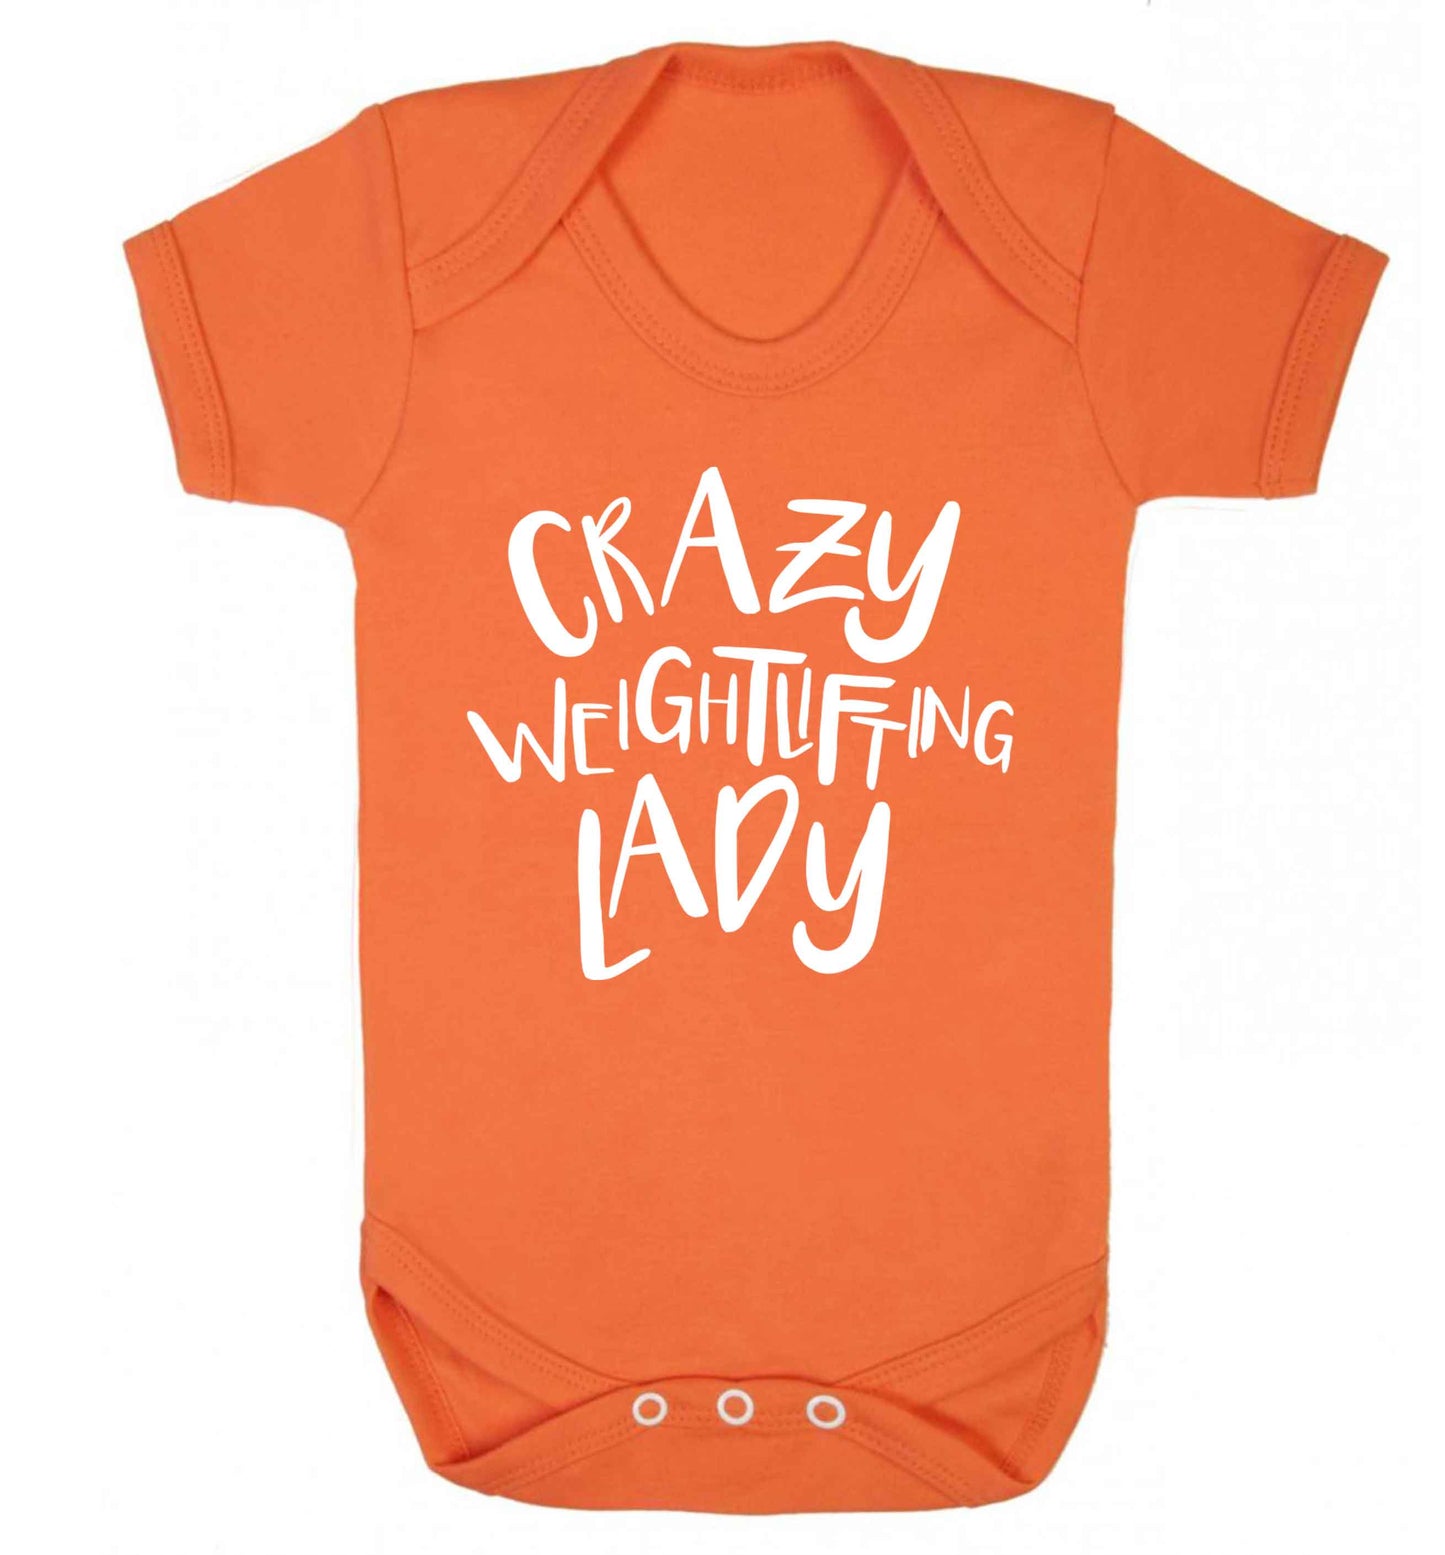 Crazy weightlifting lady Baby Vest orange 18-24 months